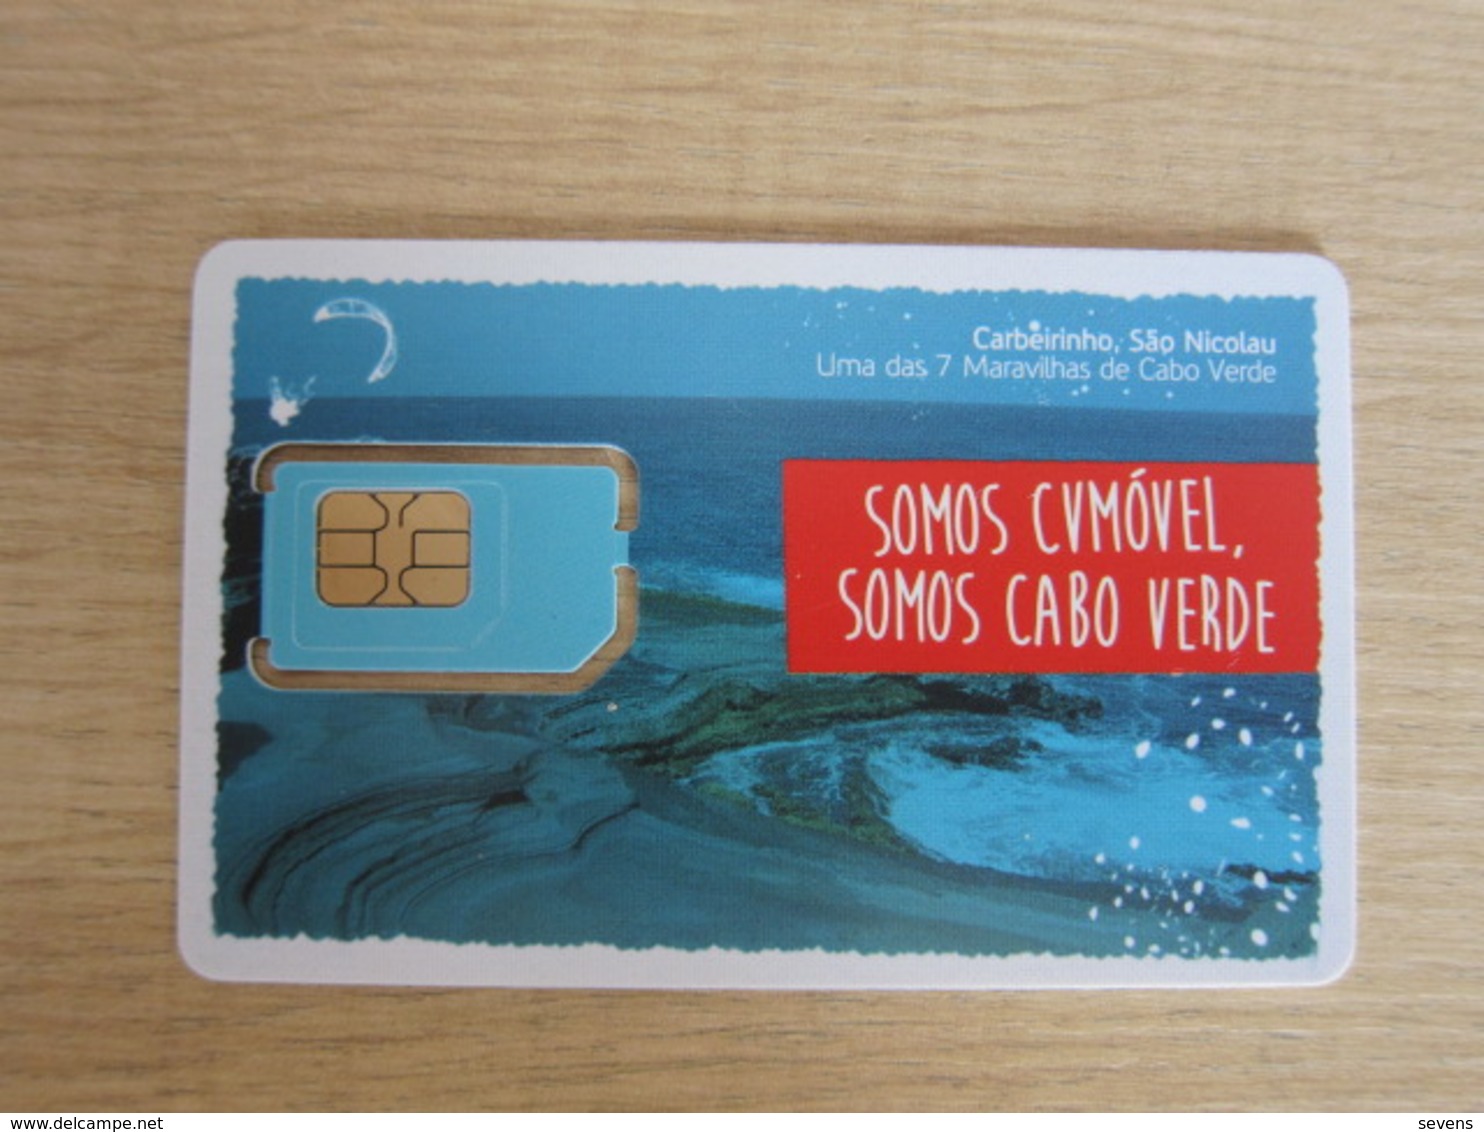 CVMOVEL GSM SIM Card,Carbeirihnho Cave, Fixed Chip - Kaapverdische Eilanden